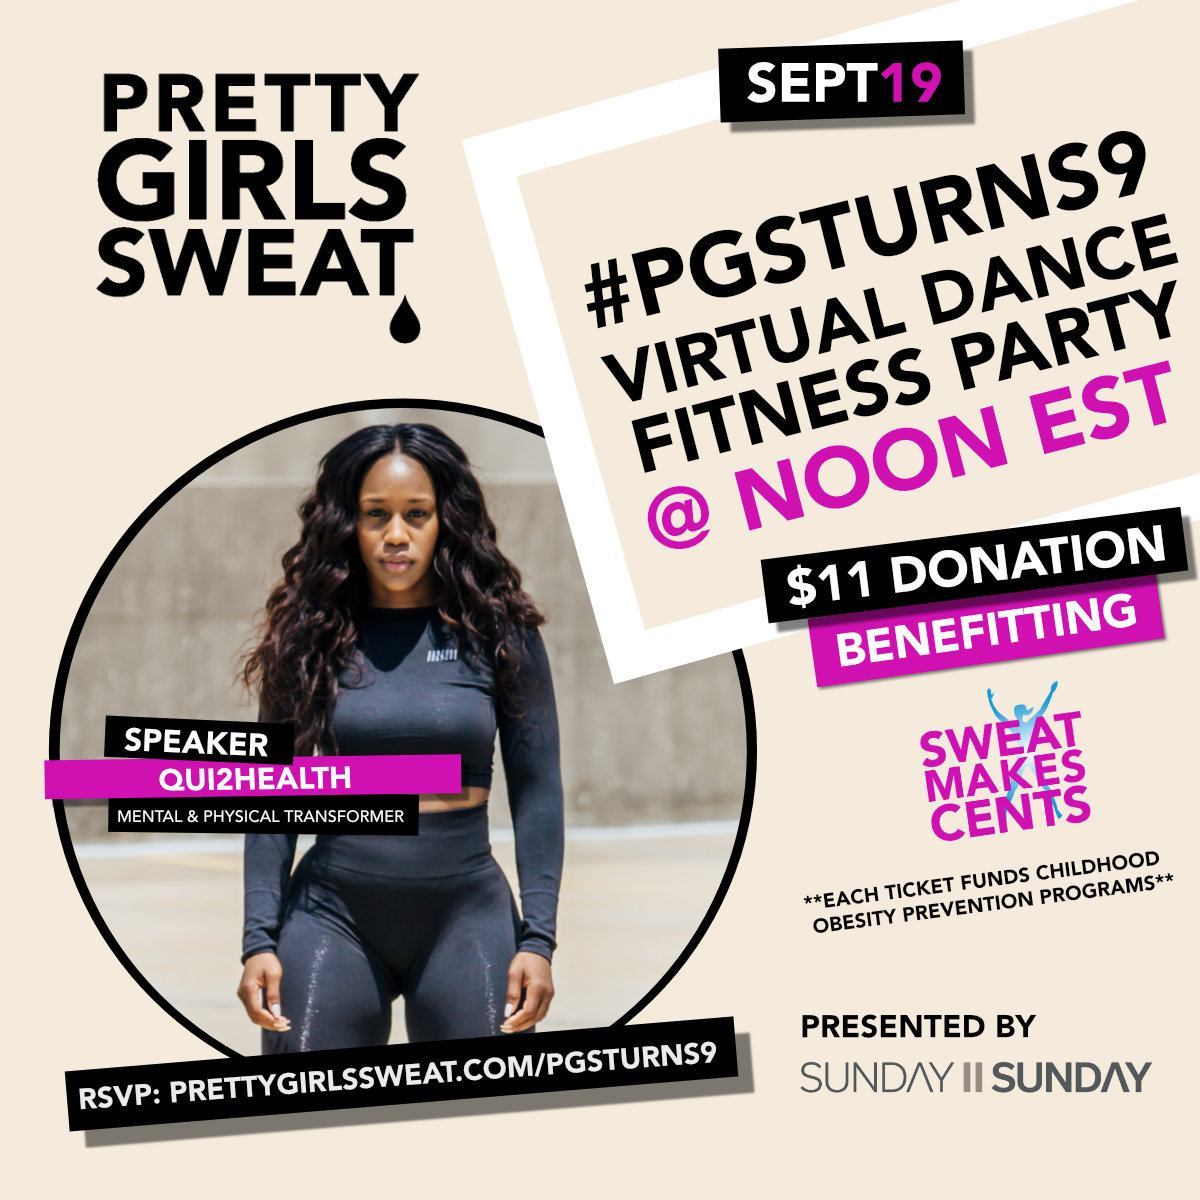 Pretty Girls Sweat & Sunday II Sunday